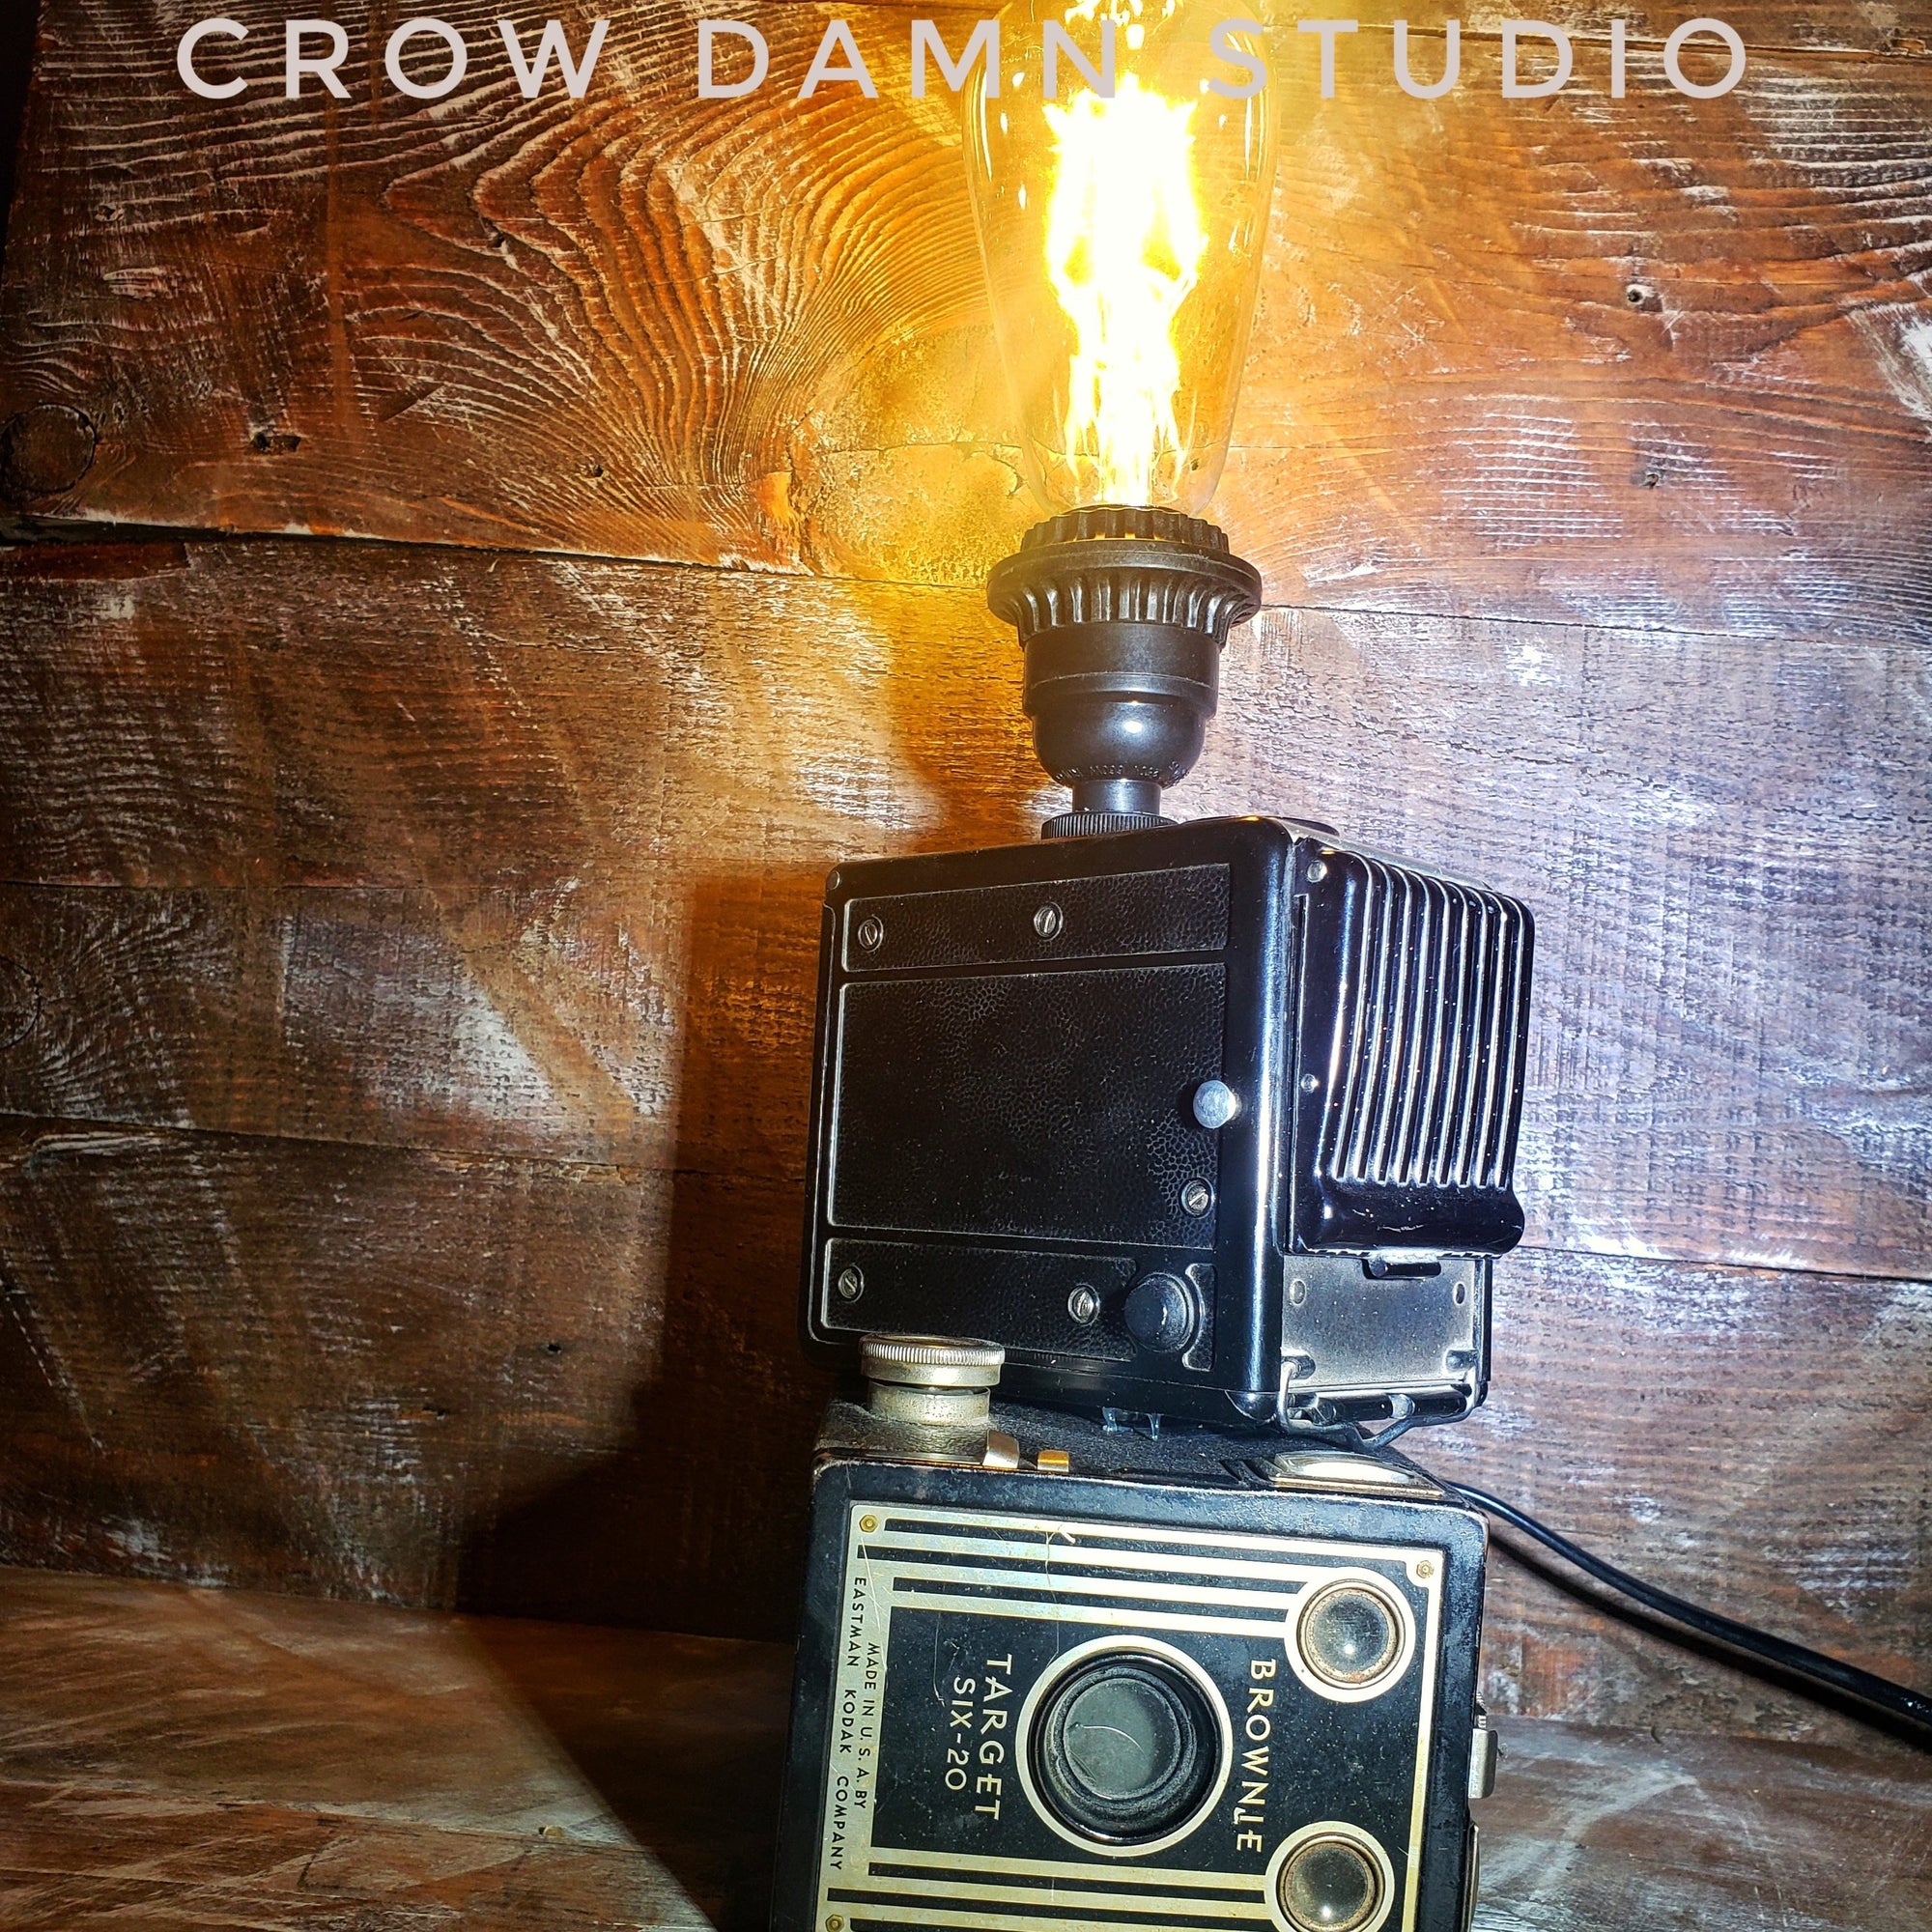 Crow Damn Studio